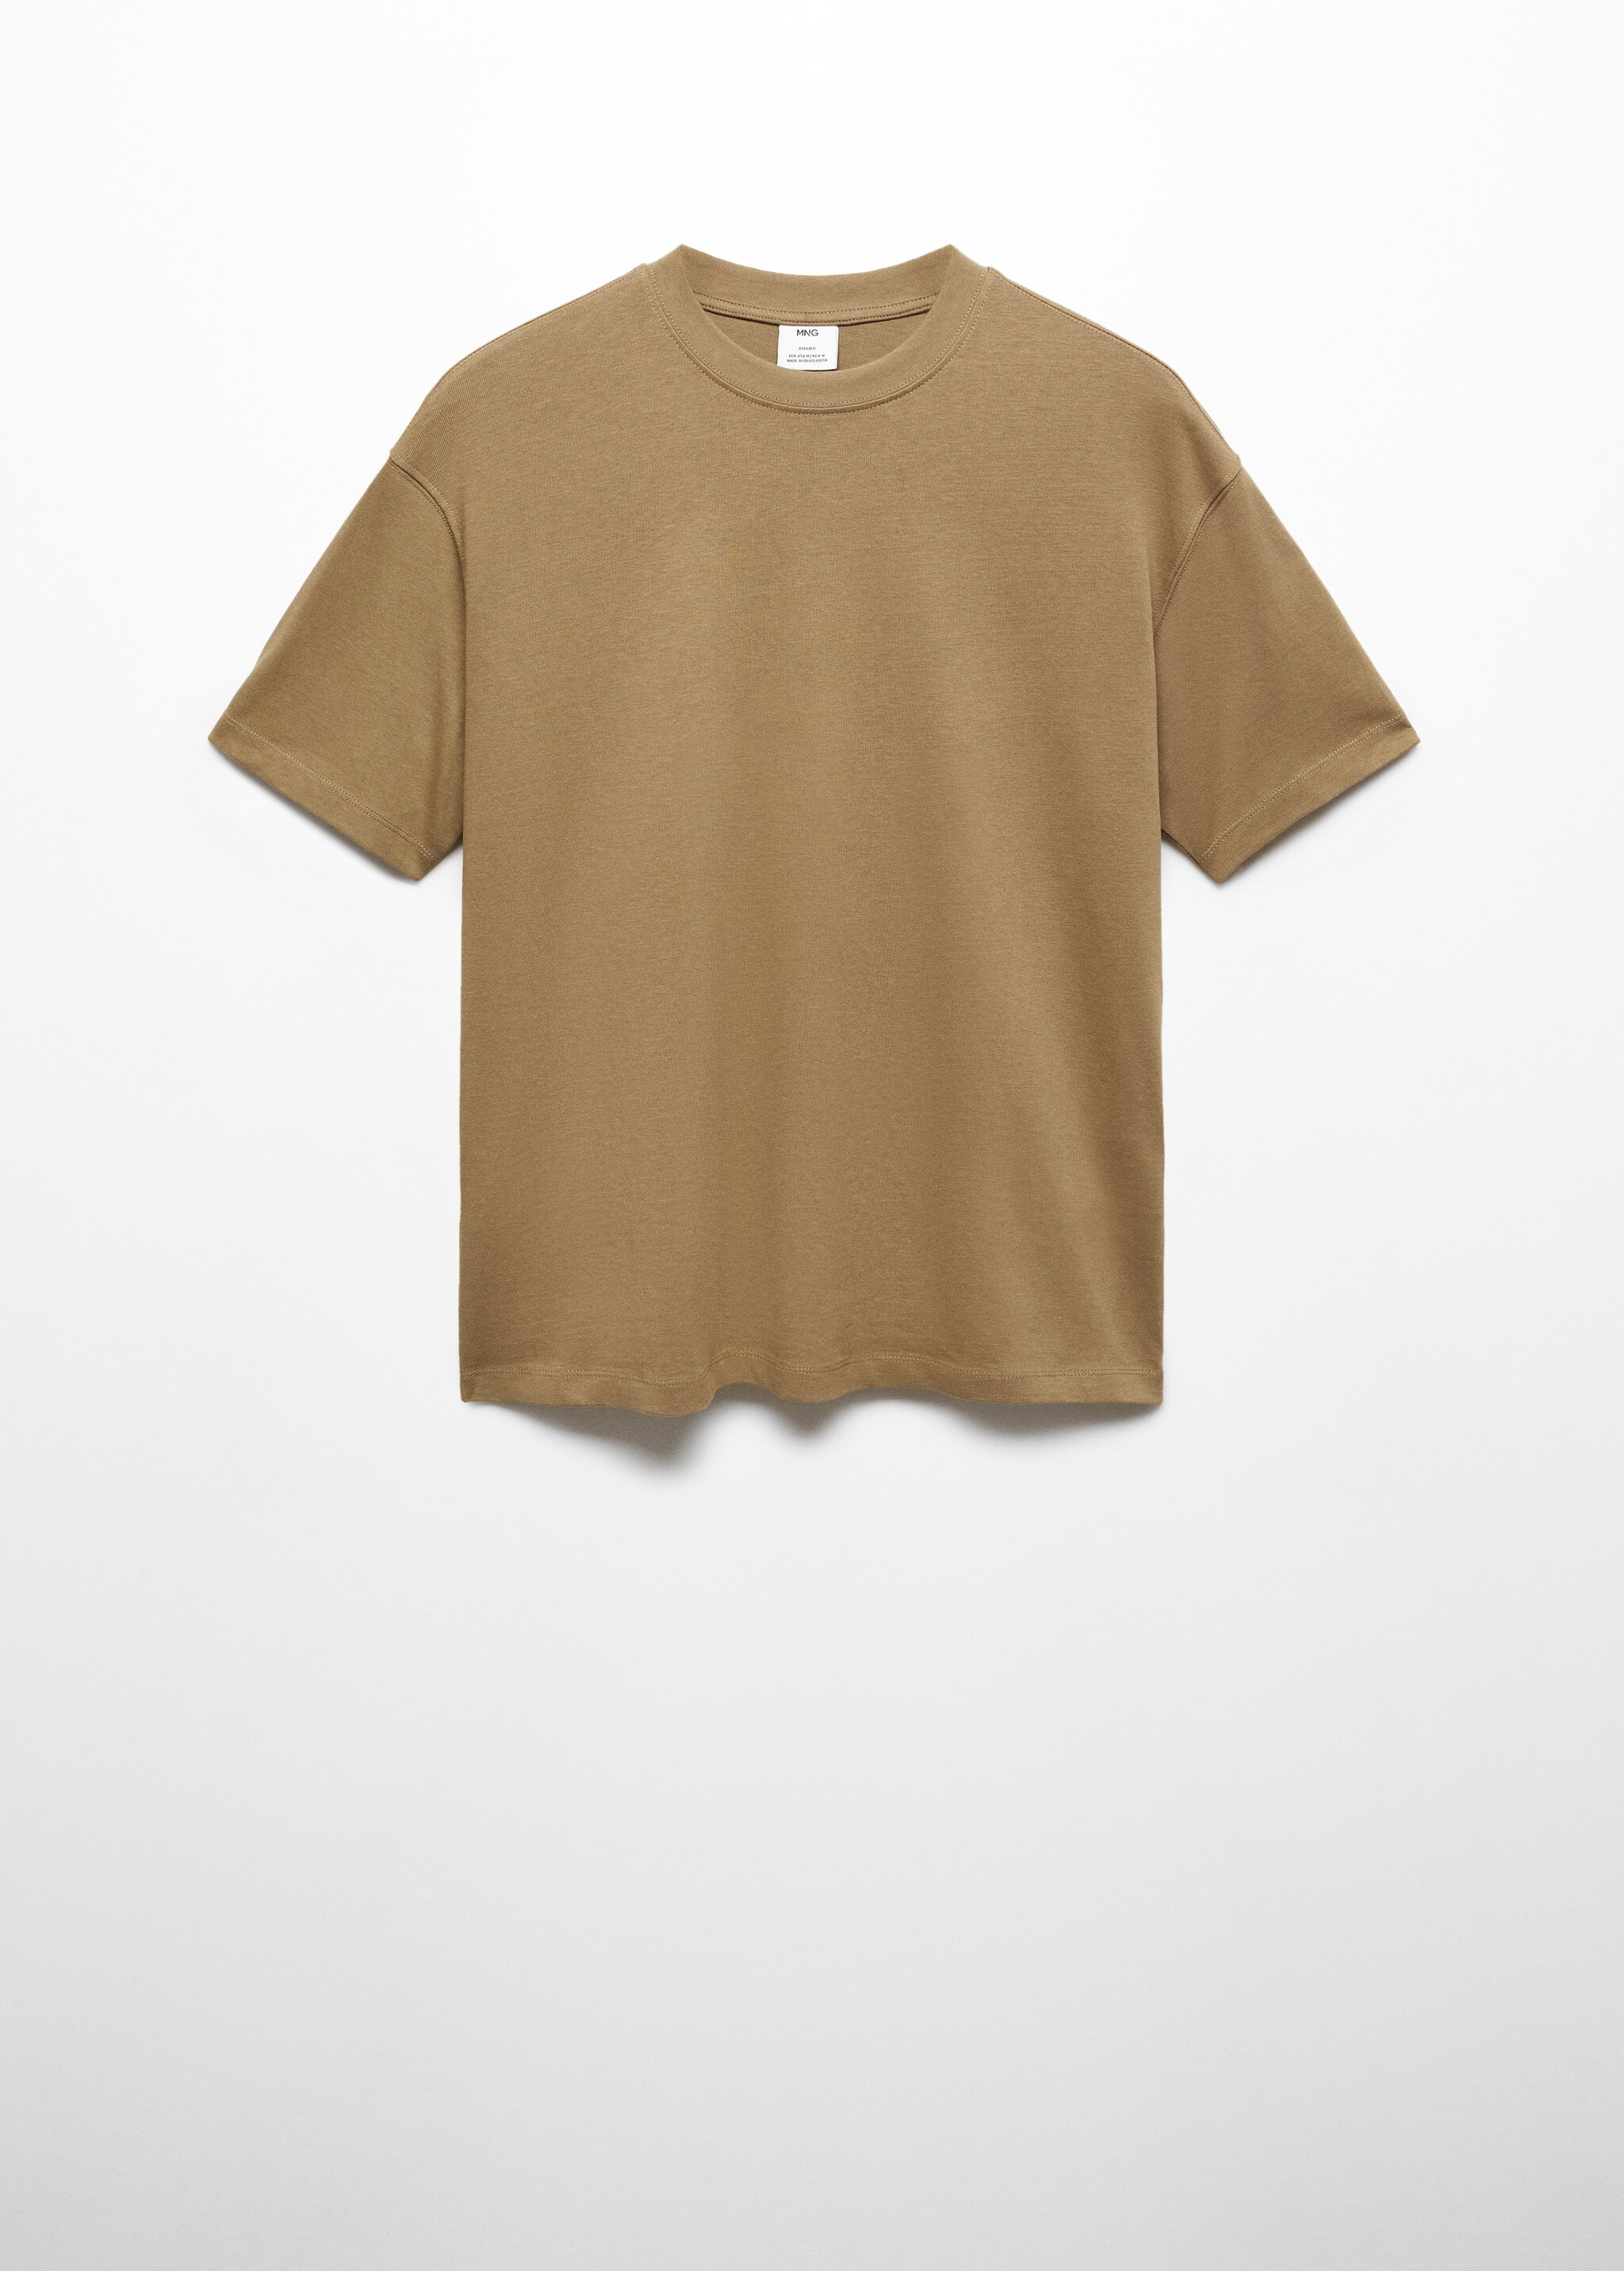 Camiseta básica 100% algodón relaxed fit - Artículo sin modelo